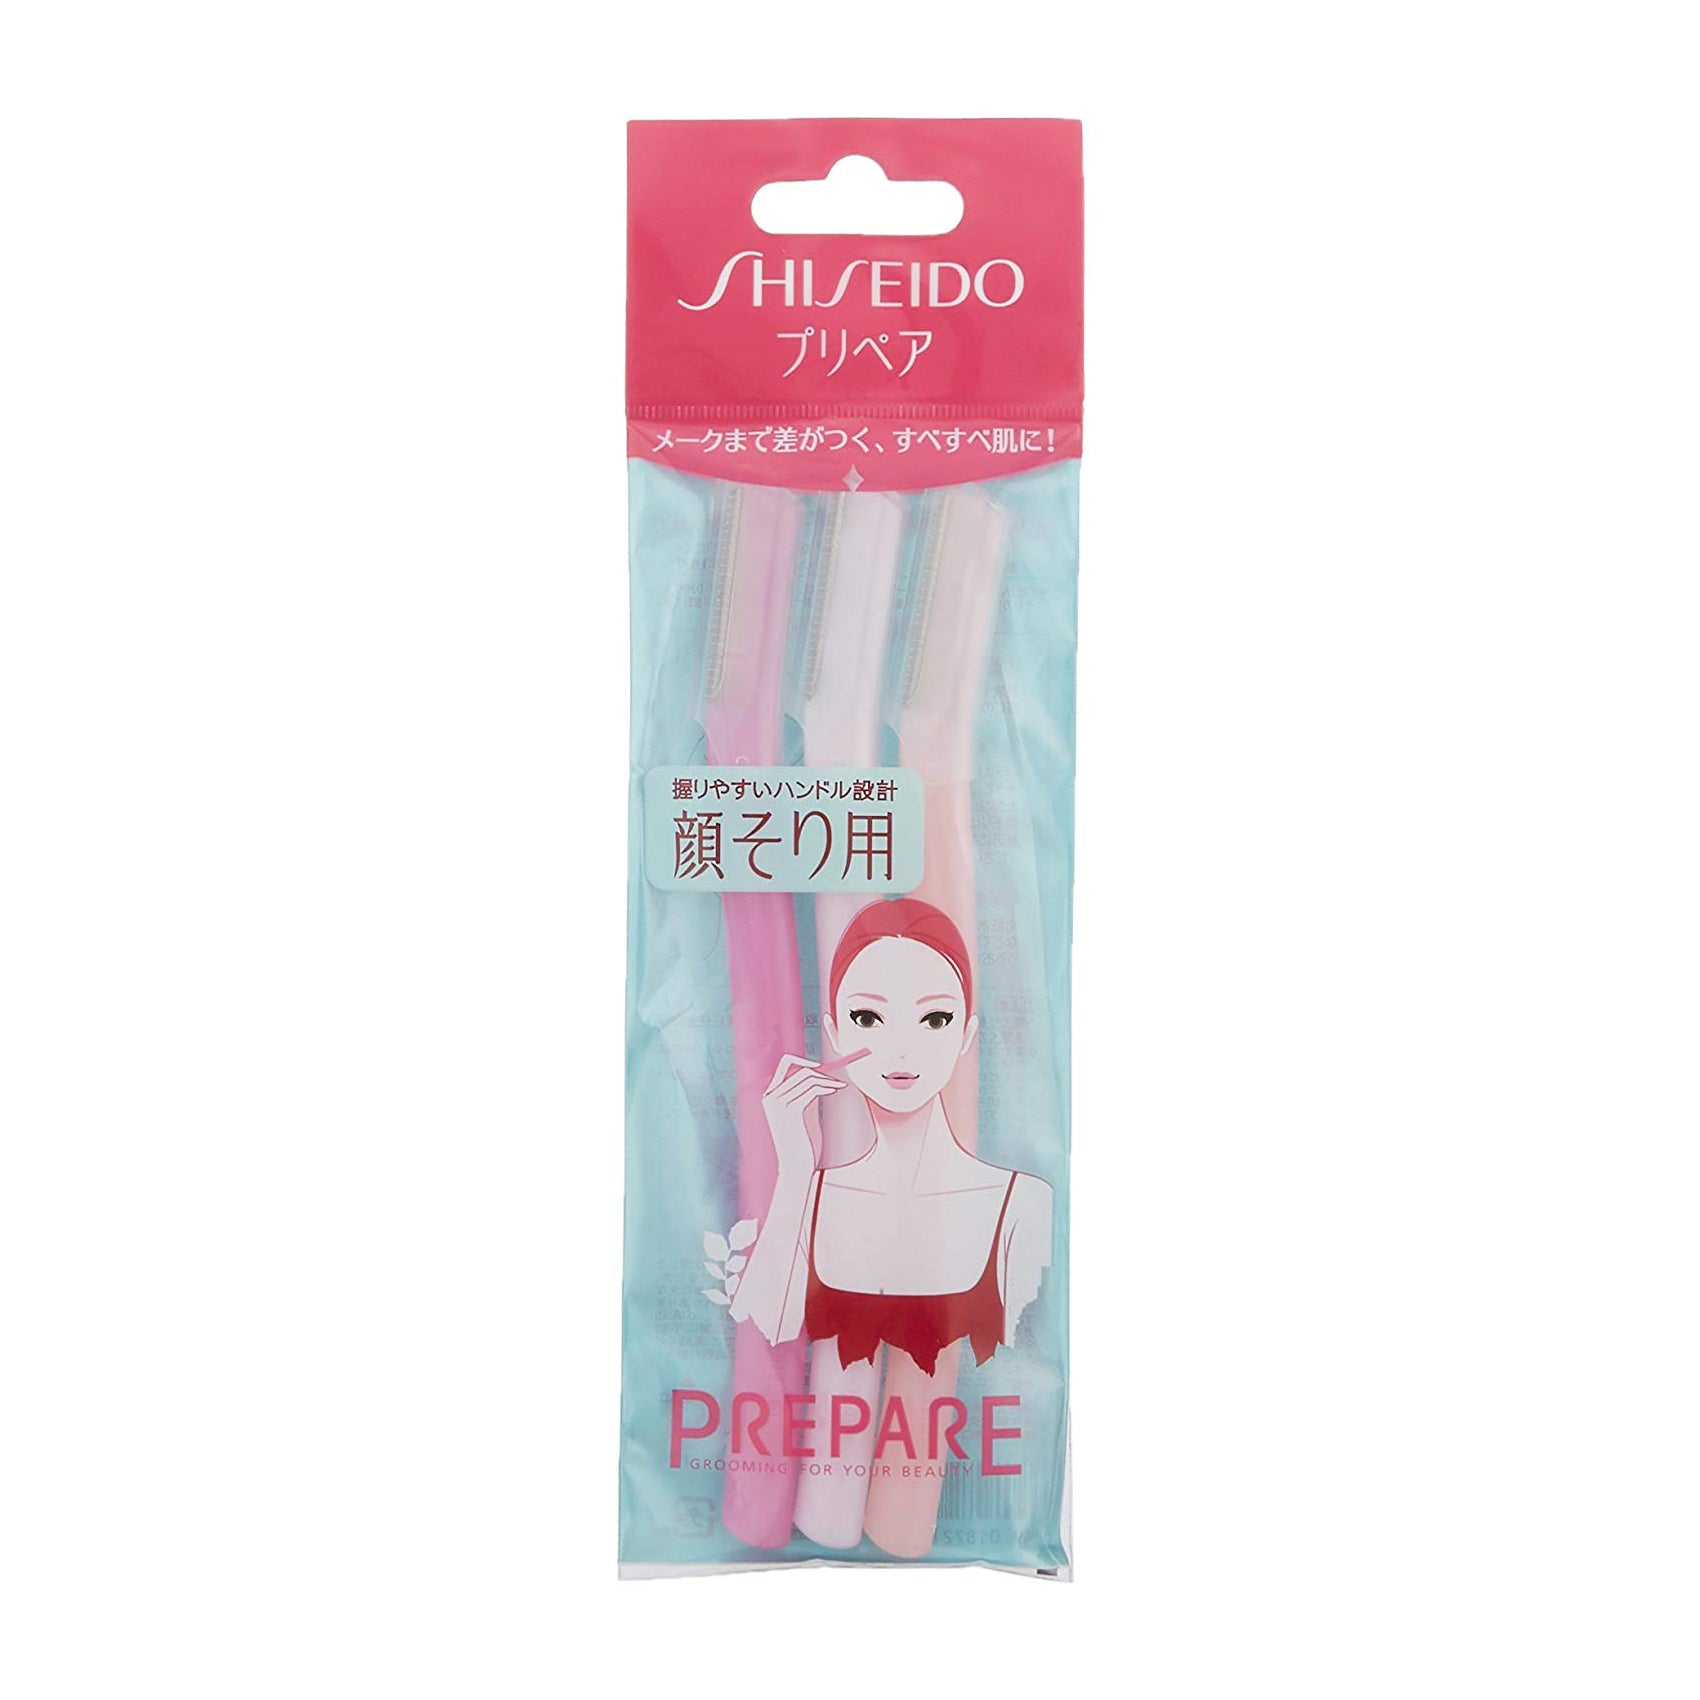 Shiseido FT Prepare Facial Razor L 3pc Beauty Shiseido   